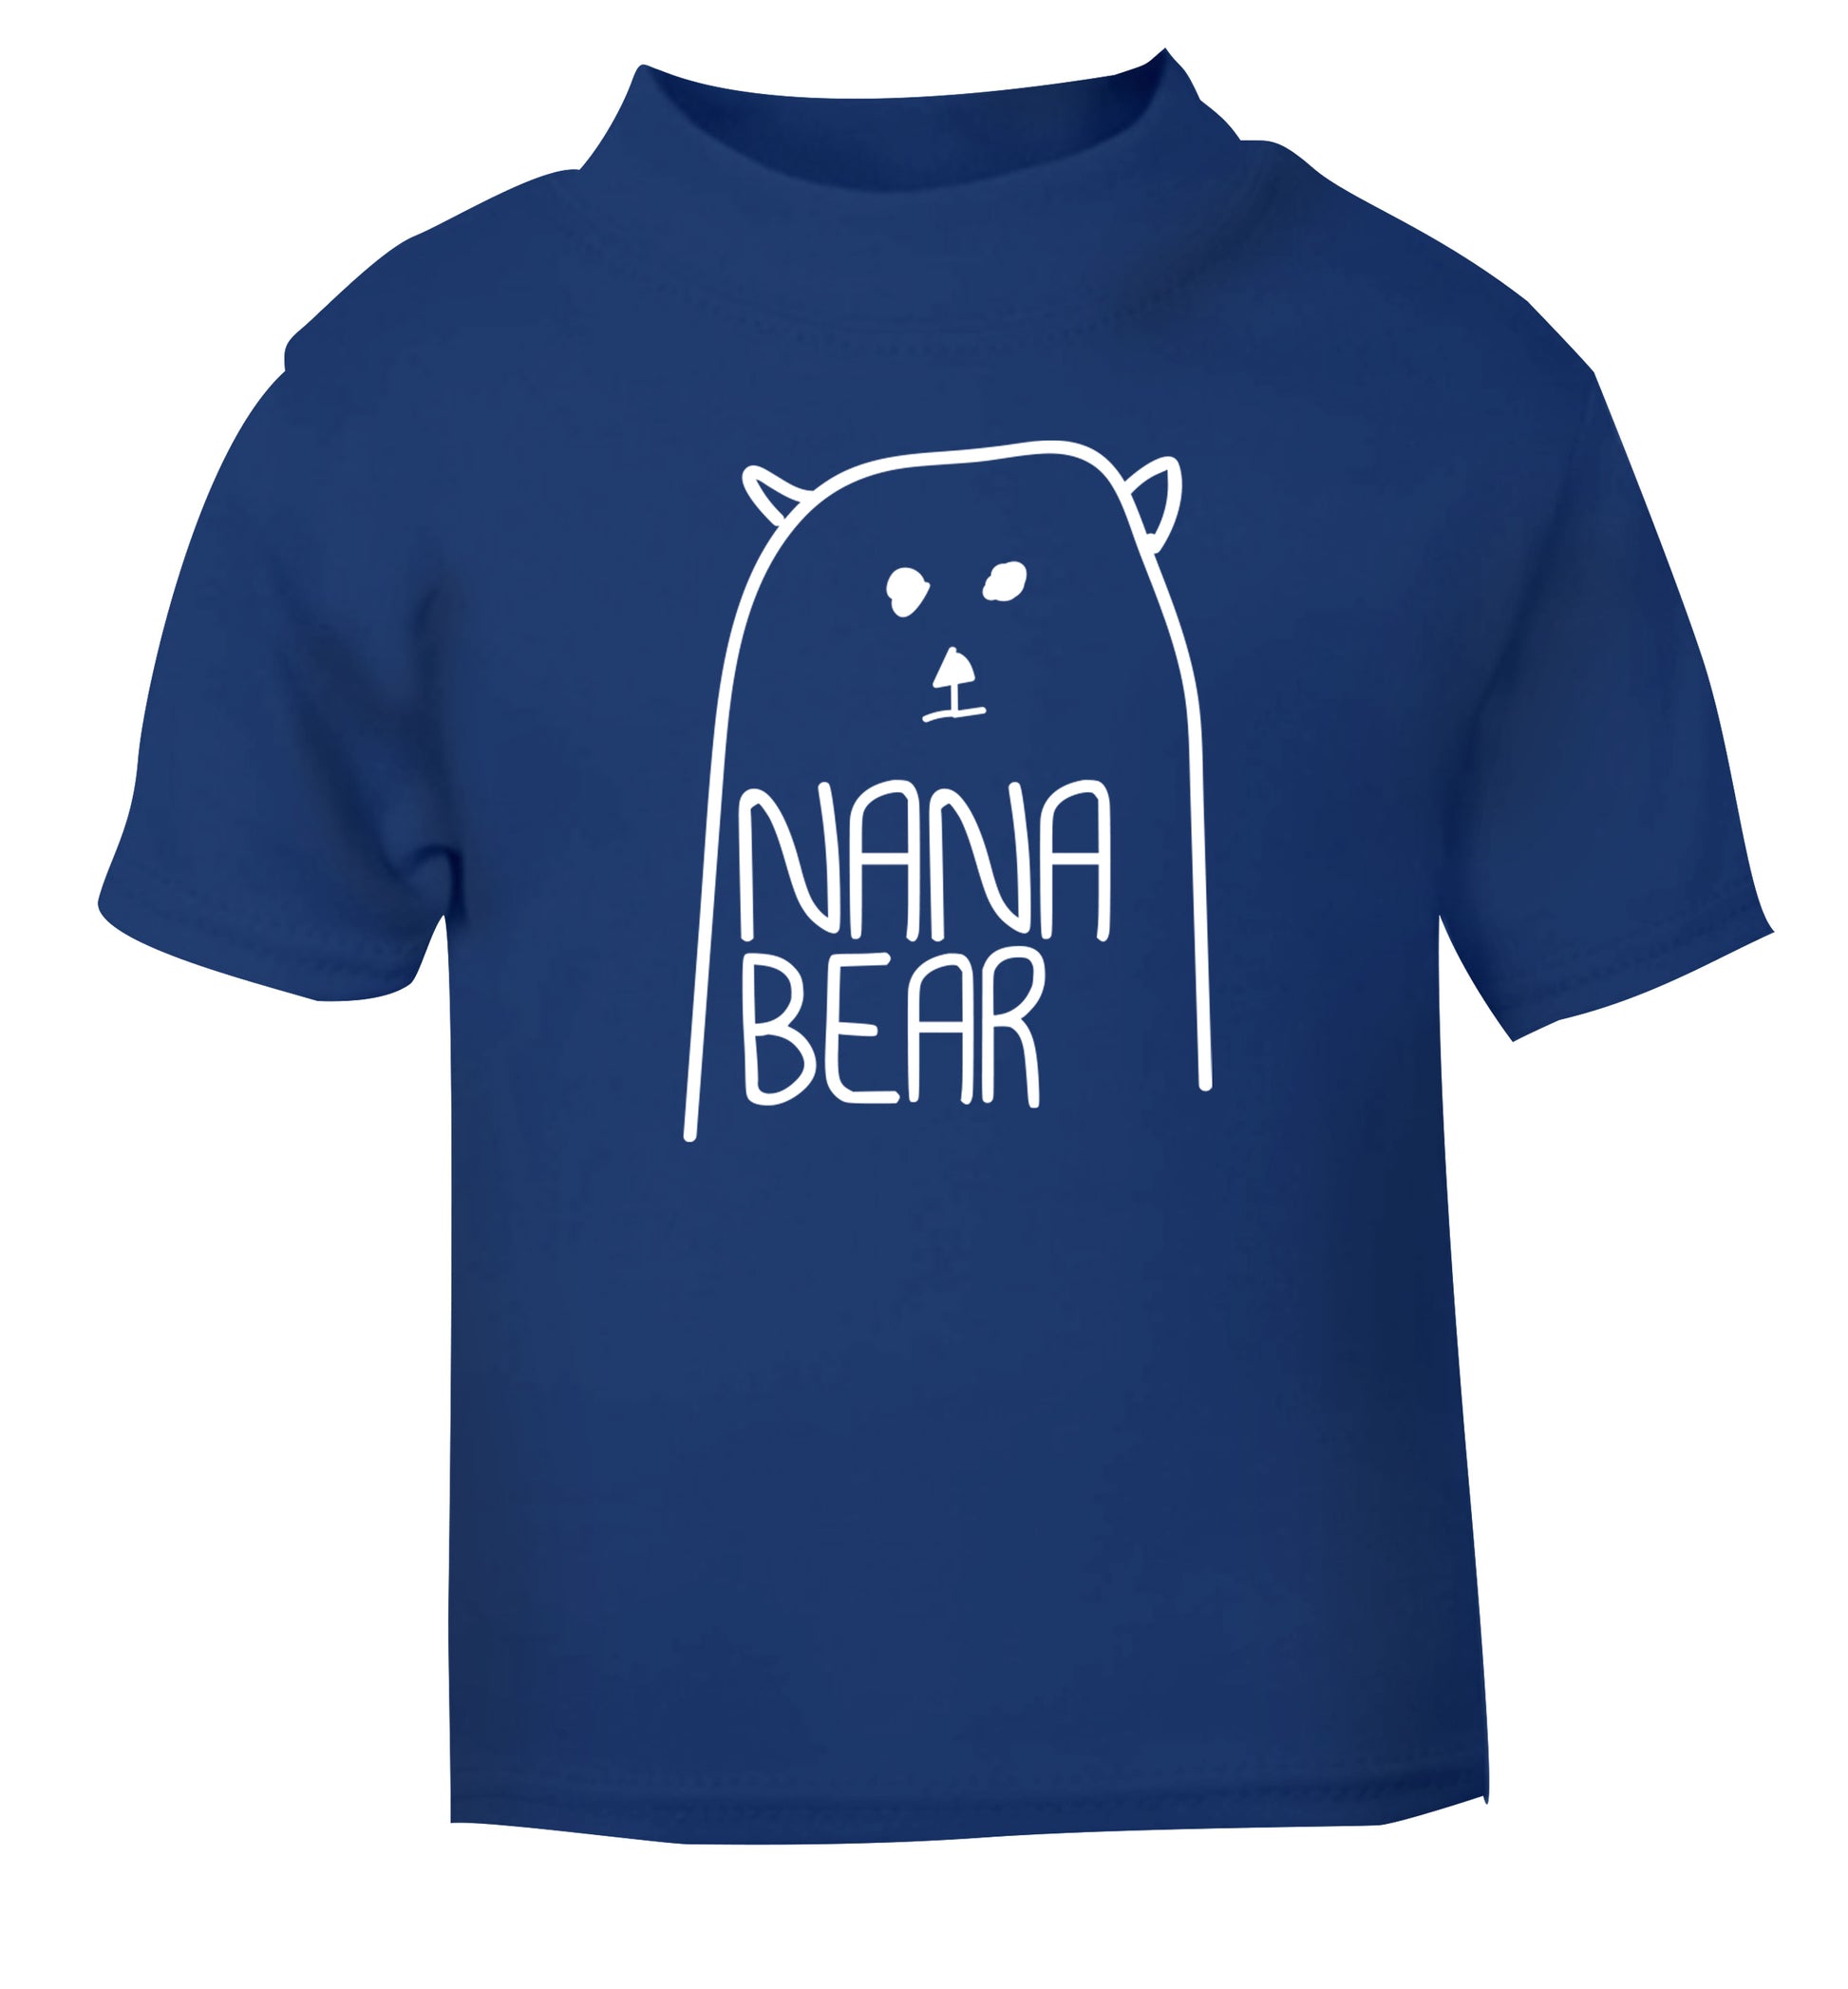 Nana bear blue Baby Toddler Tshirt 2 Years